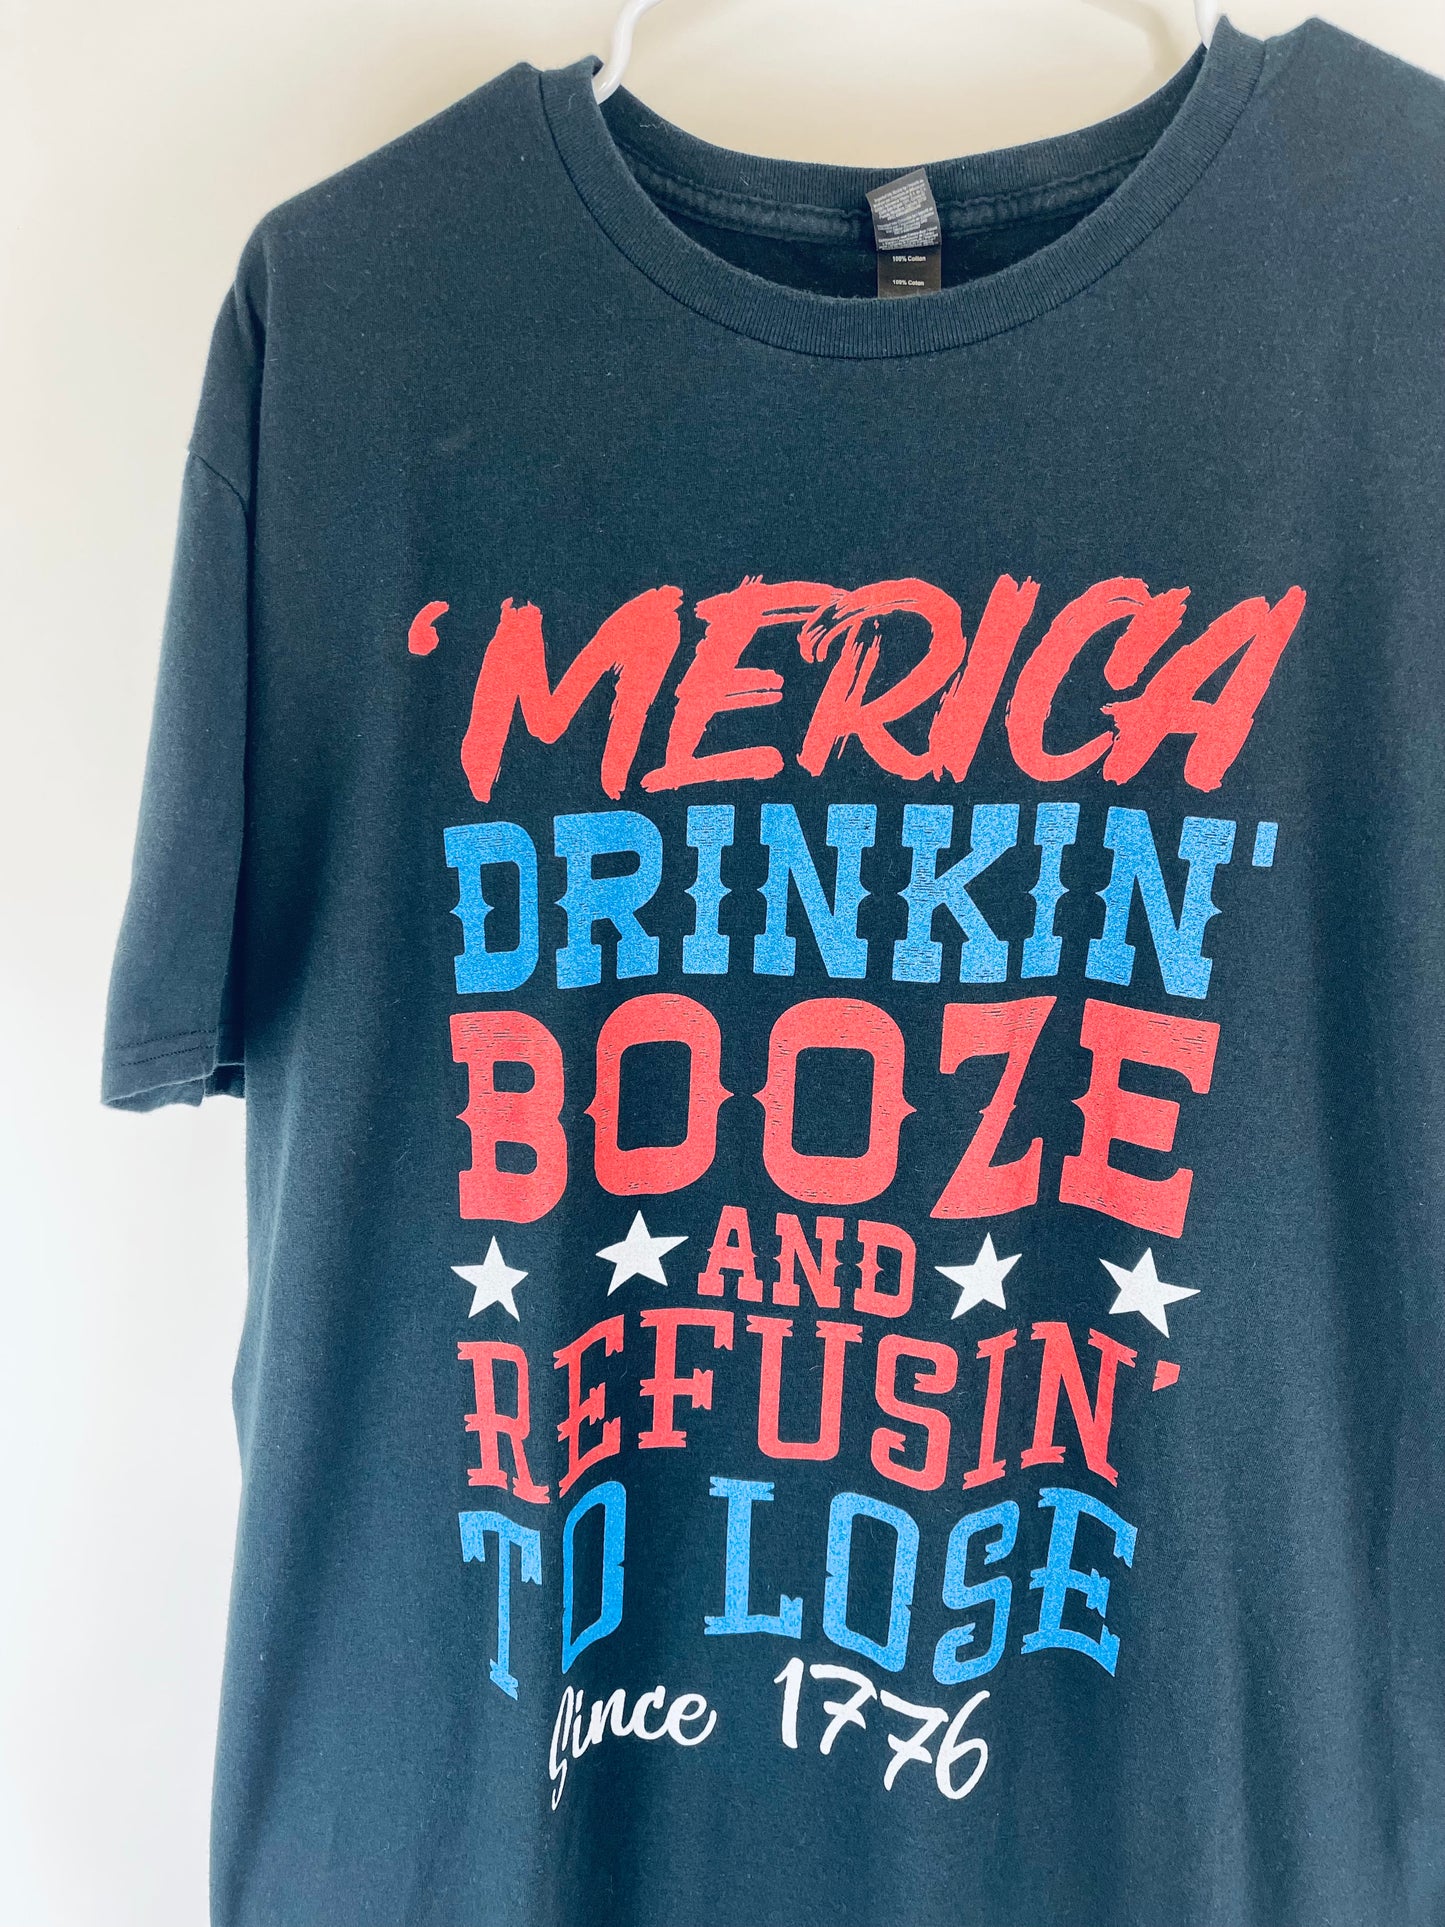 "'Merica" Patriotic Booze T Shirt - Men's XL